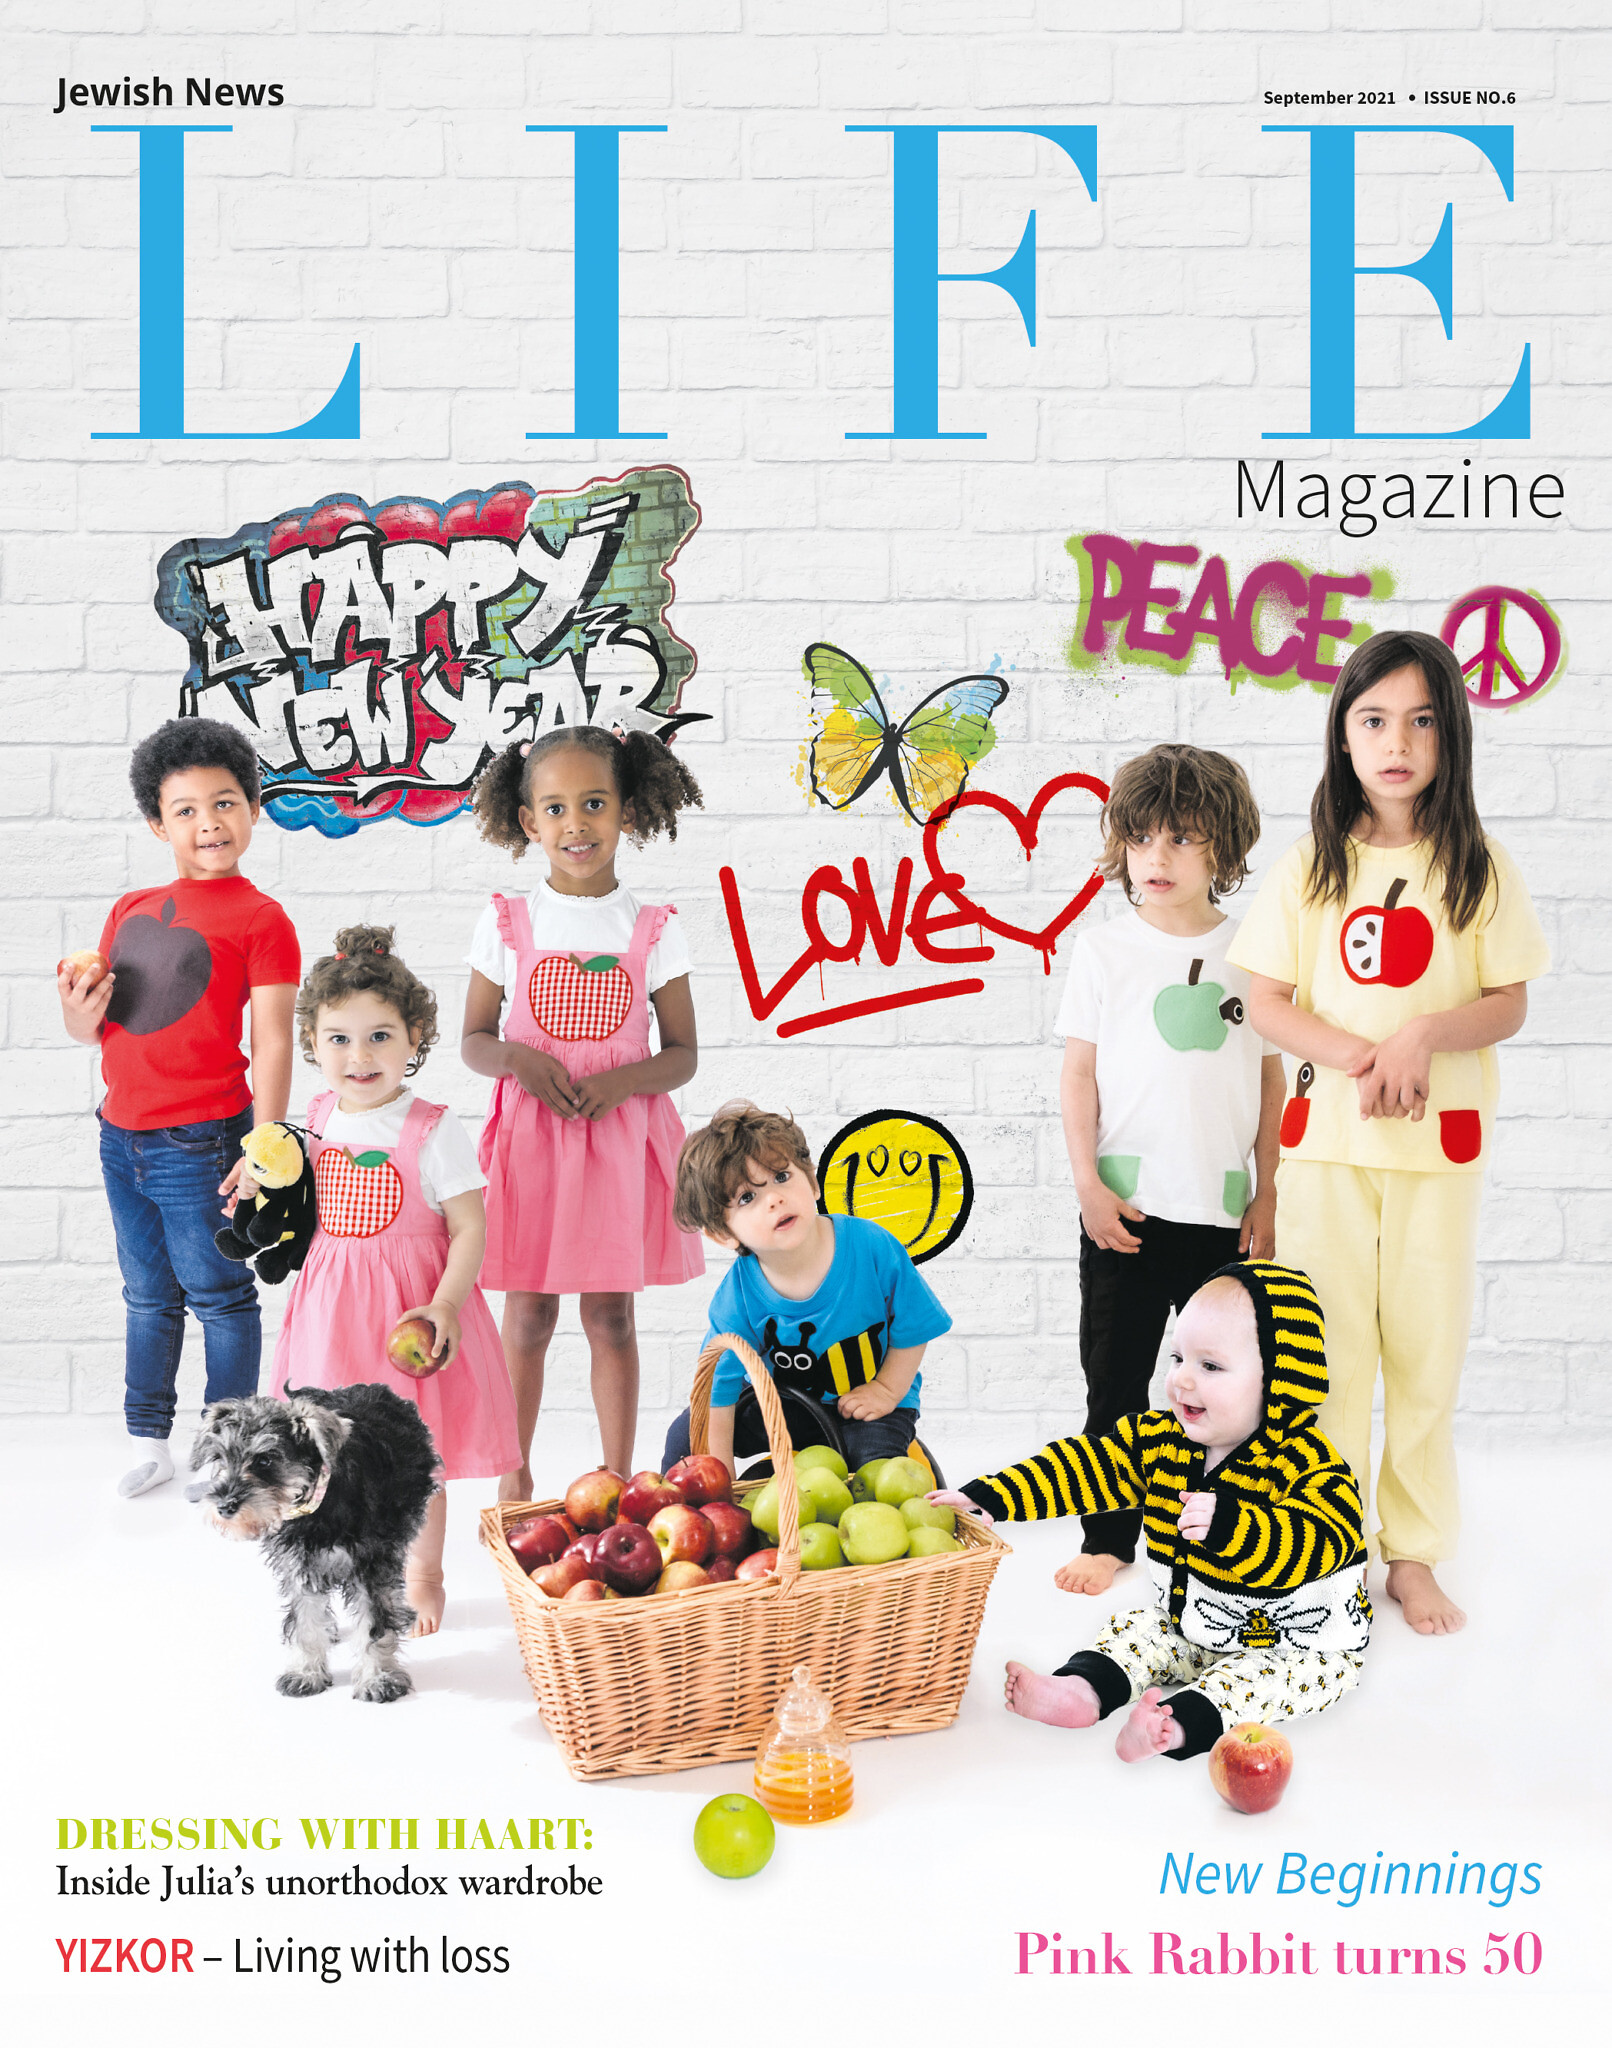 Read life magazine!